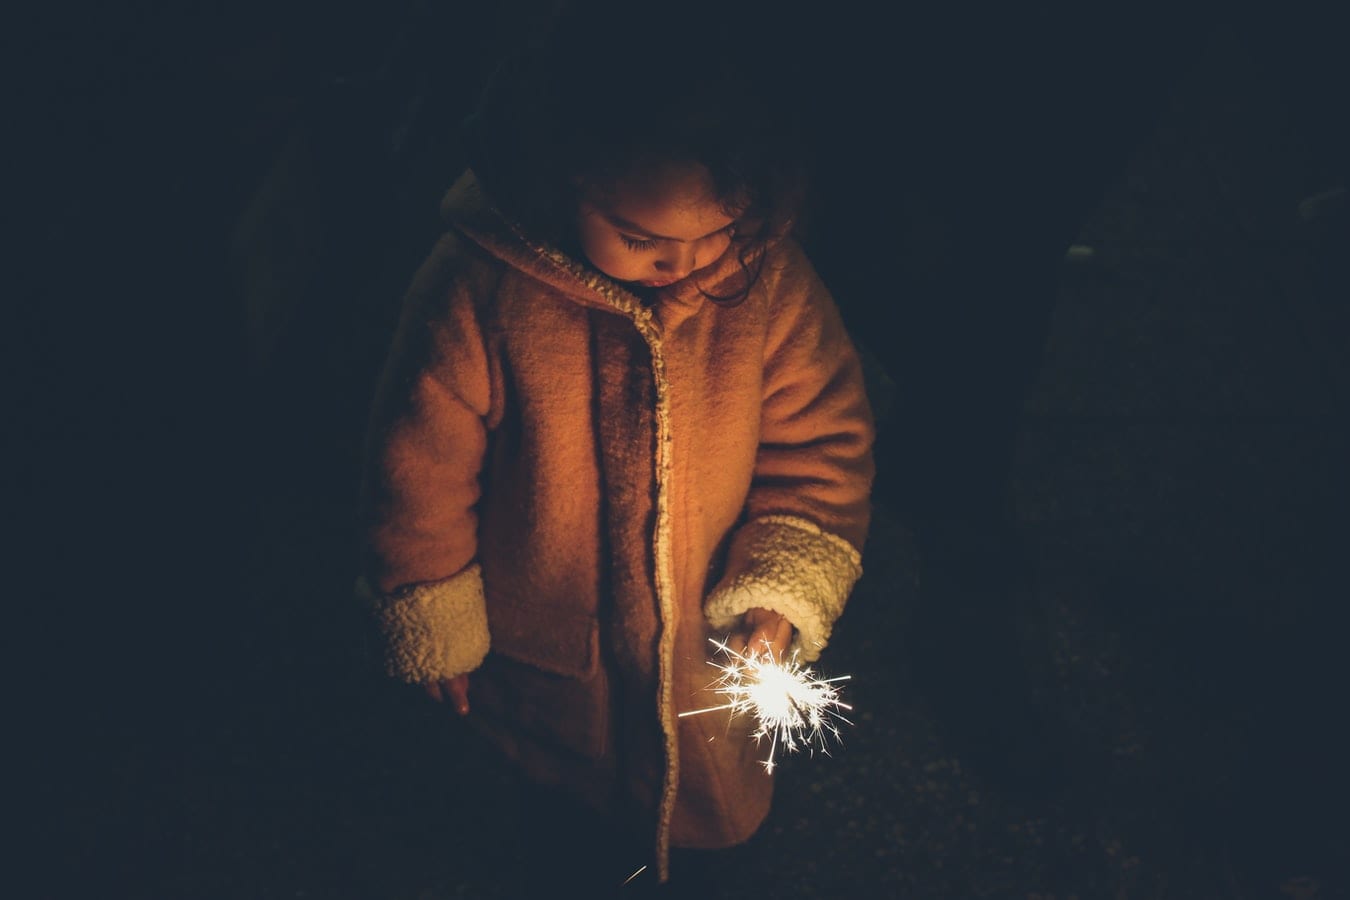 Child with sparkler